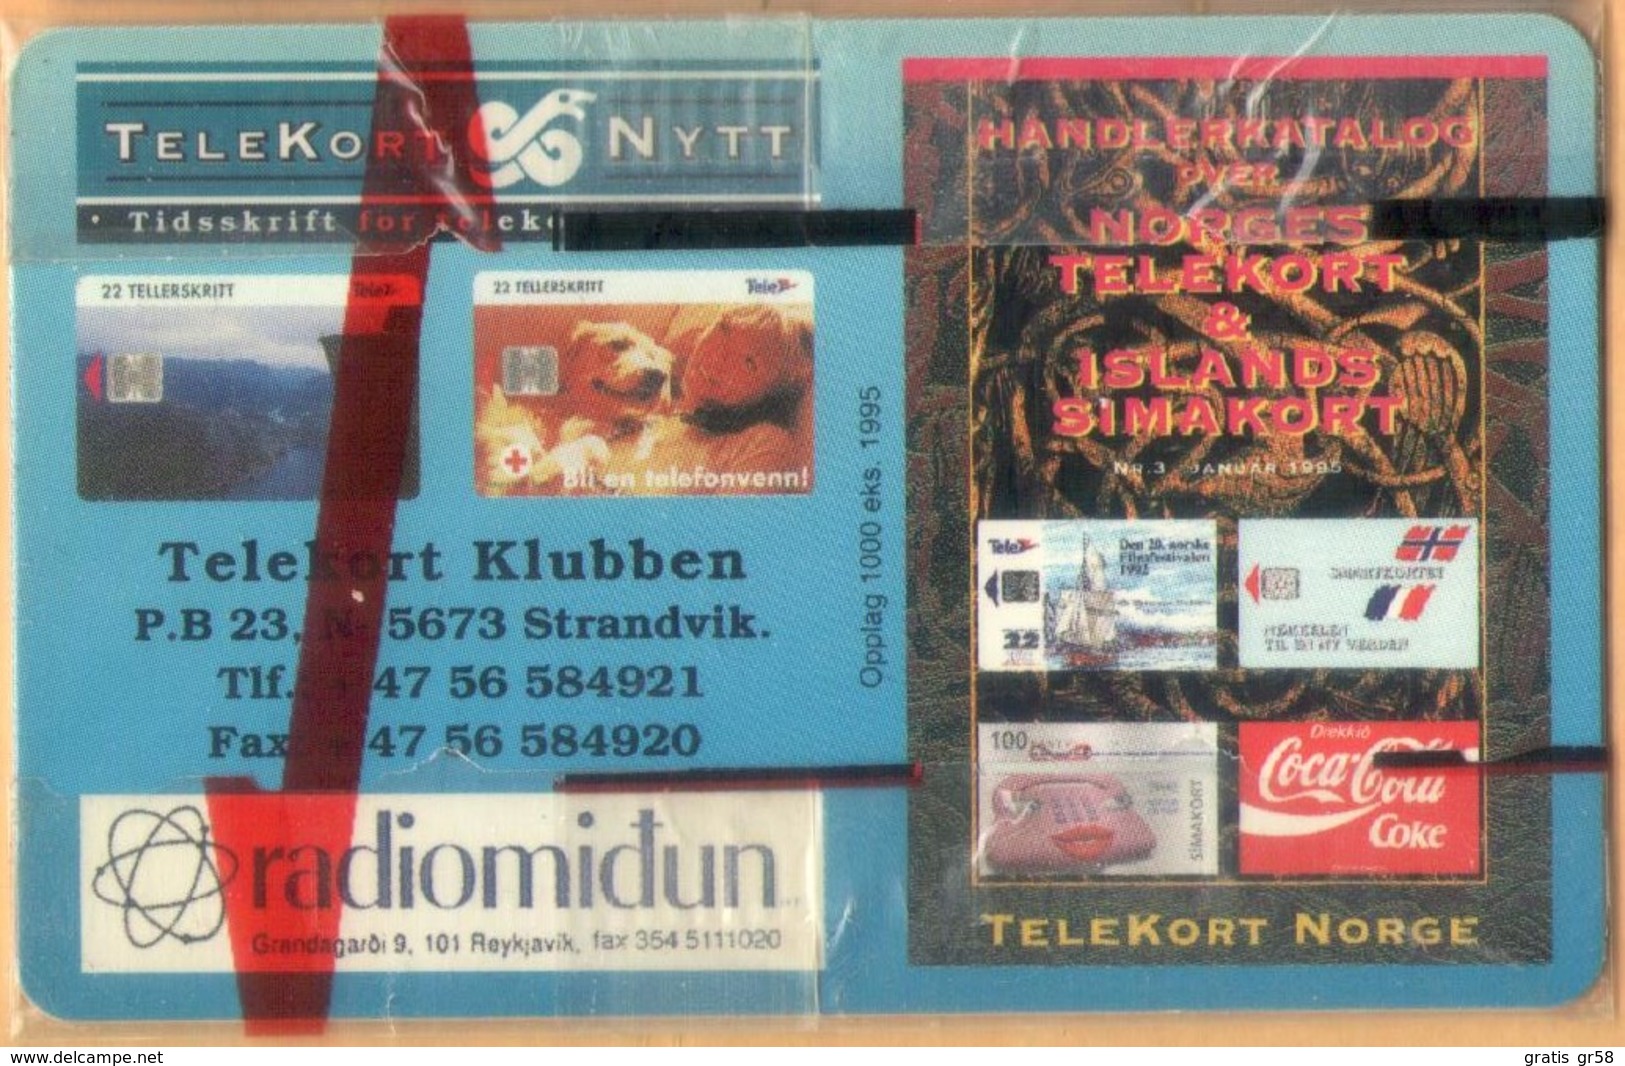 Iceland - ICE-P-1, Radomidun, TeleKort Norge - Astronaut, Coca Cola, 100U, 1,000ex, 1995, Mint NSB - Islanda